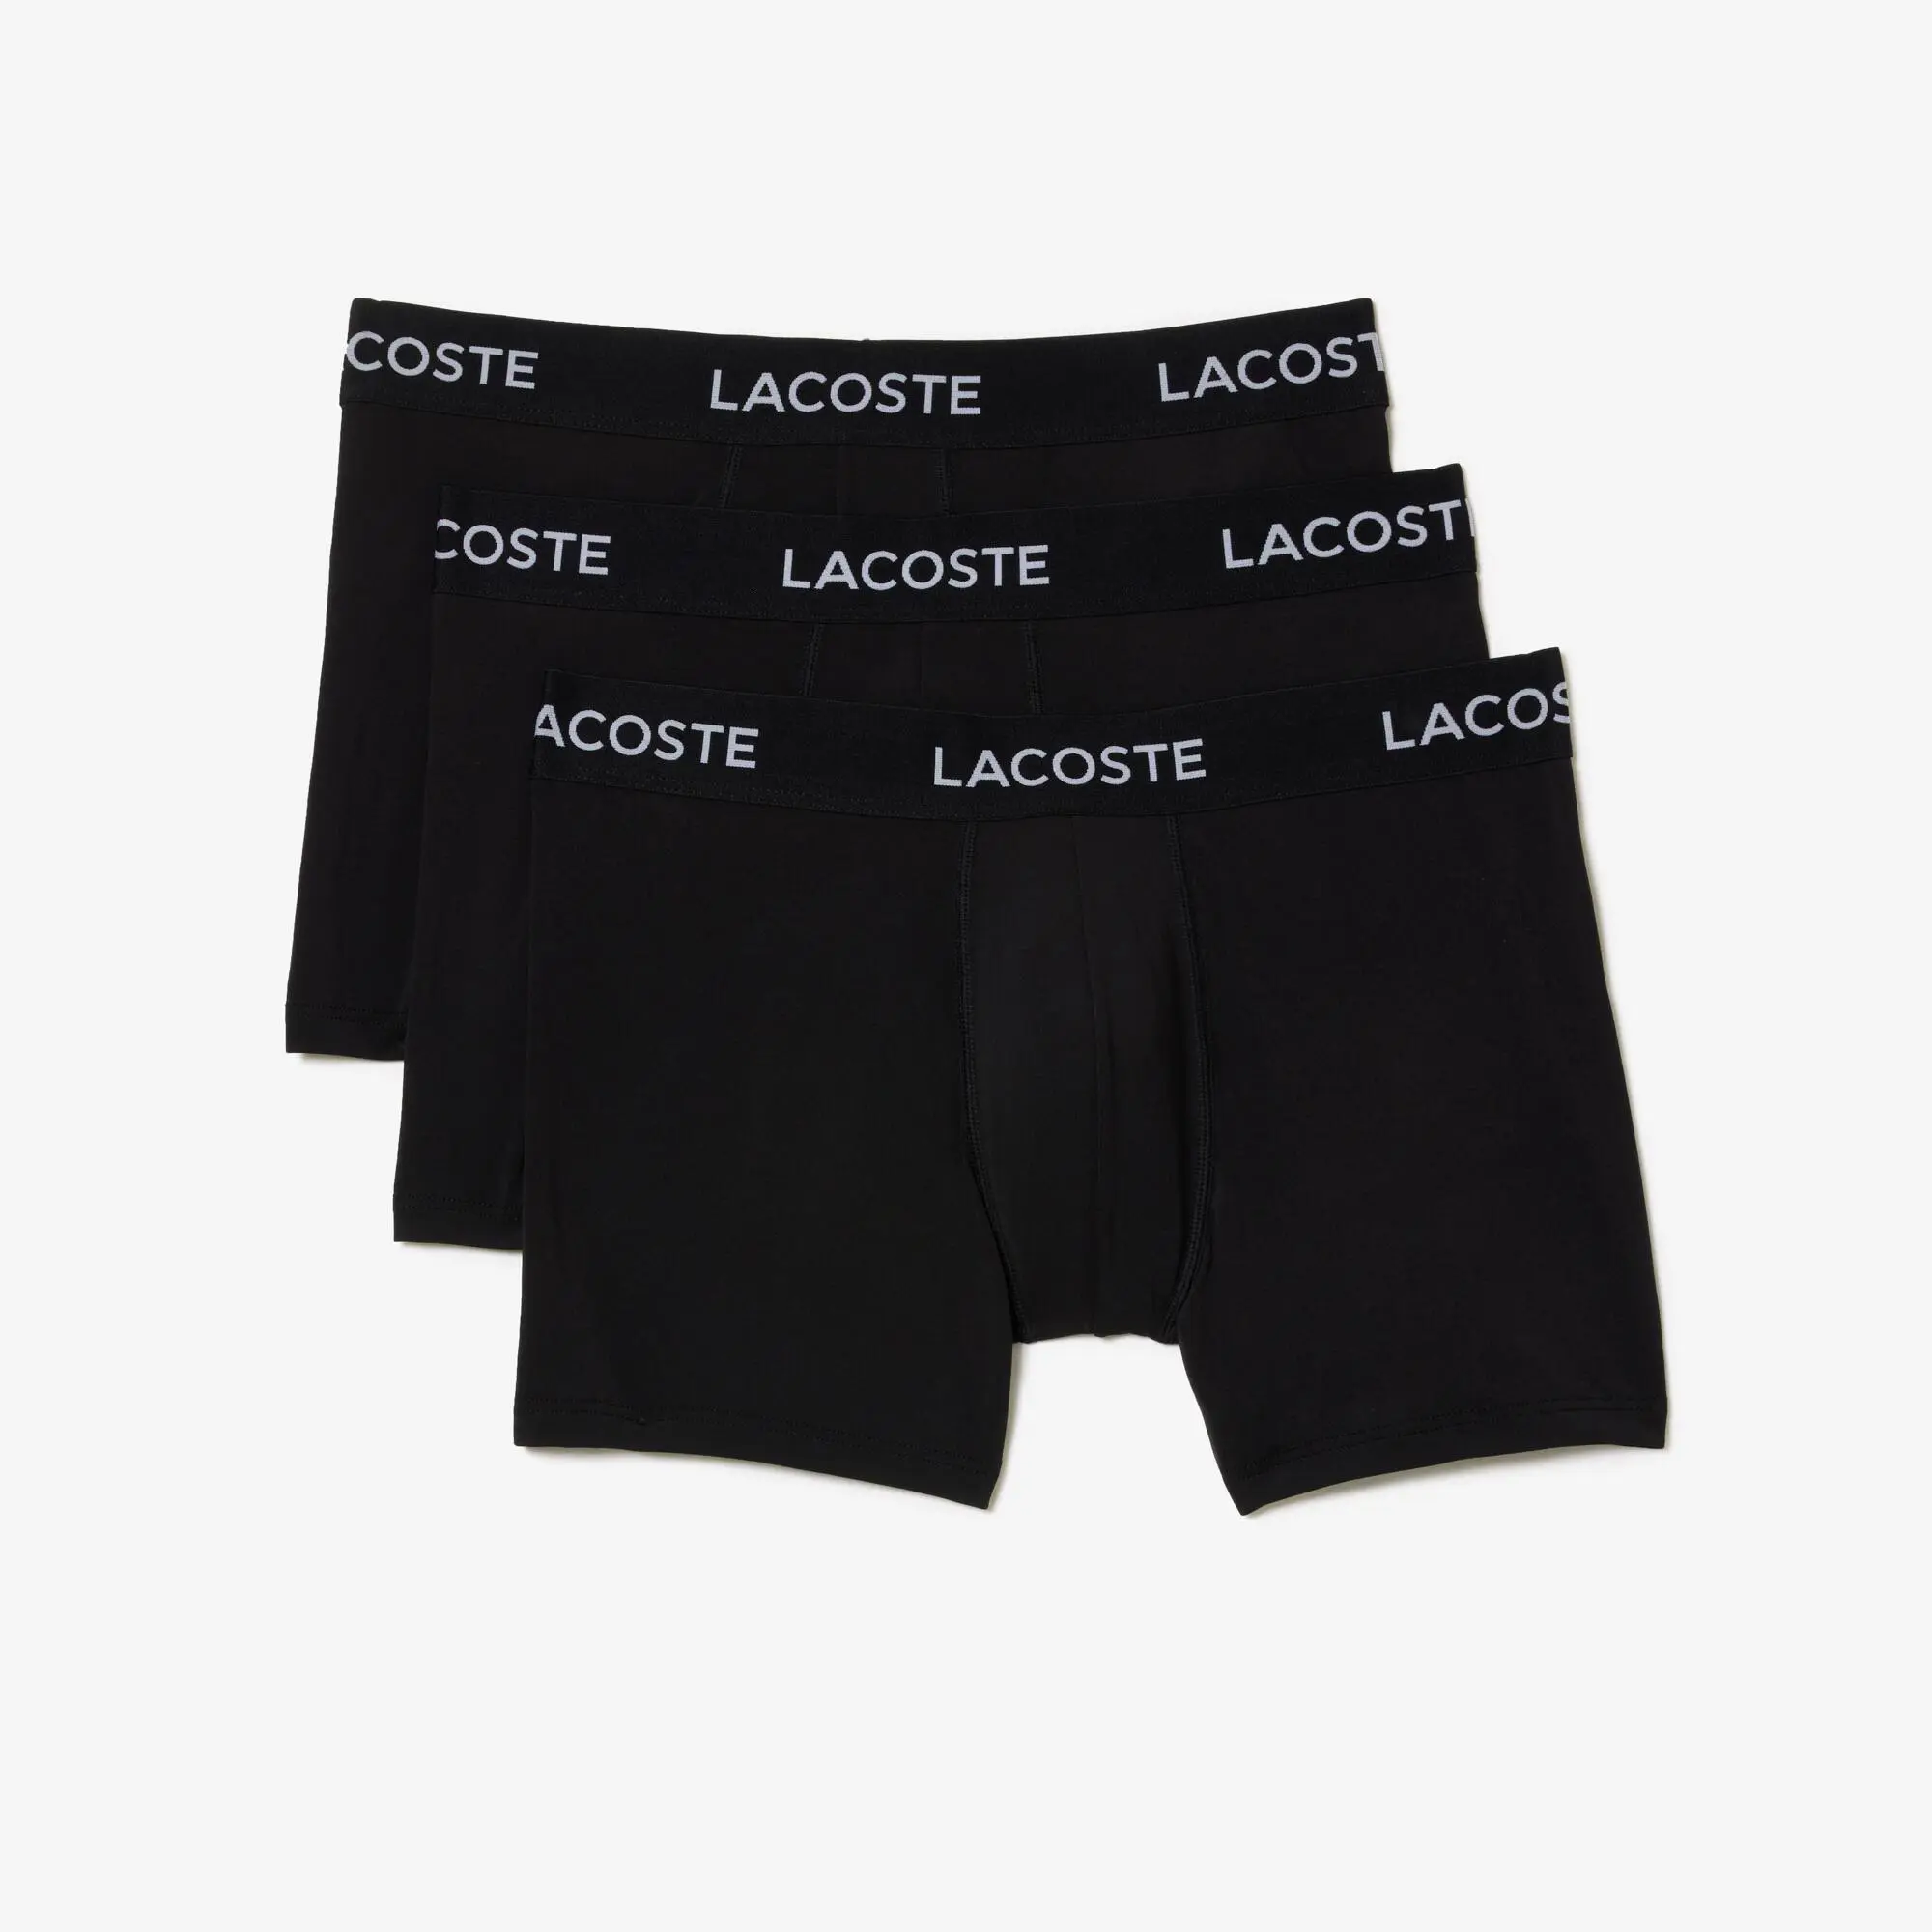 Lacoste Men’s Microfiber Trunk 3-Pack. 2